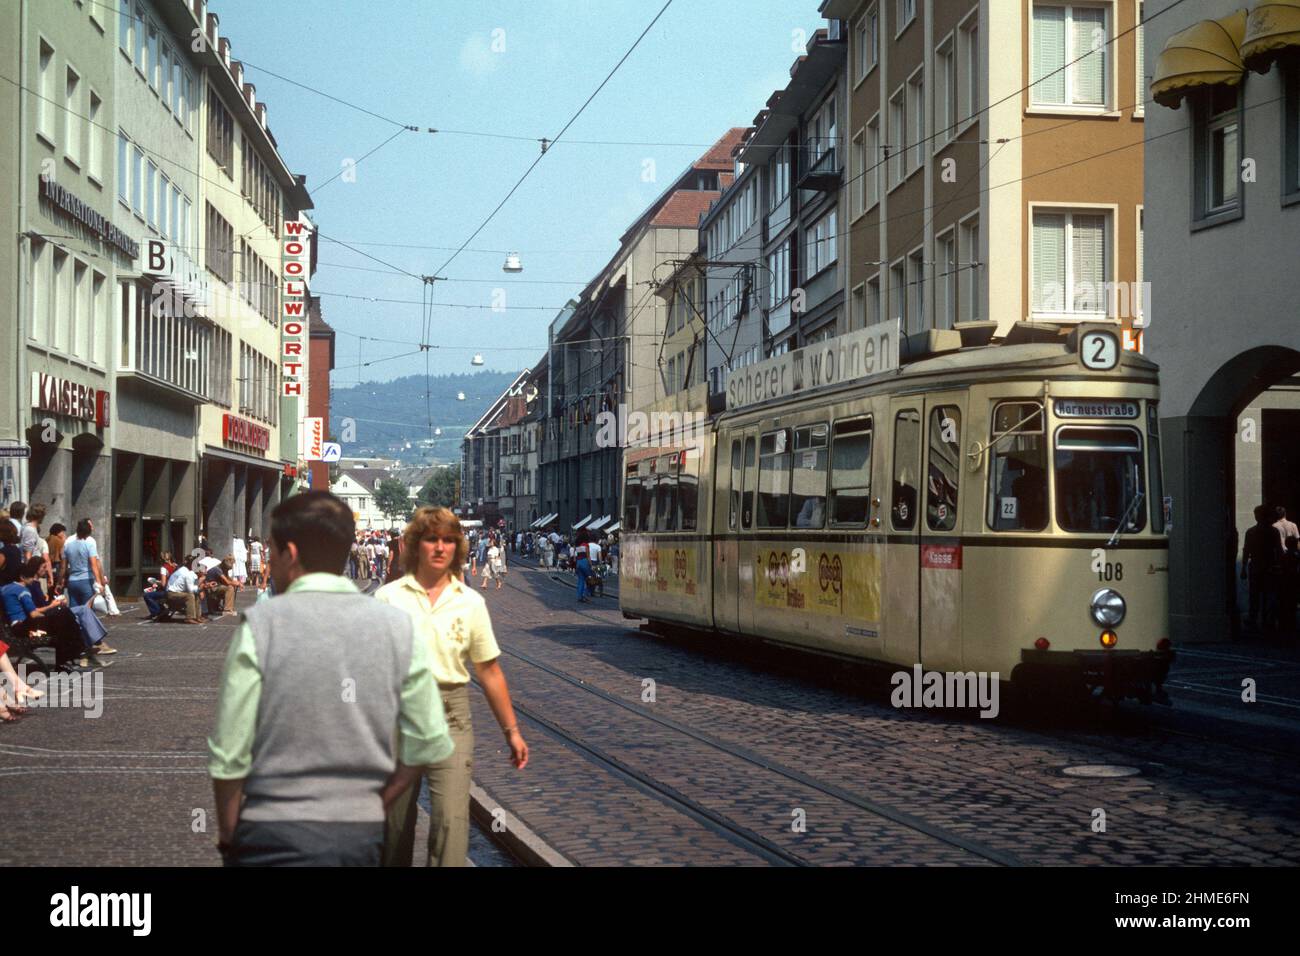 Street scene with tram in 1981, Freiburg, Baden-Württemberg, Germany Stock Photo